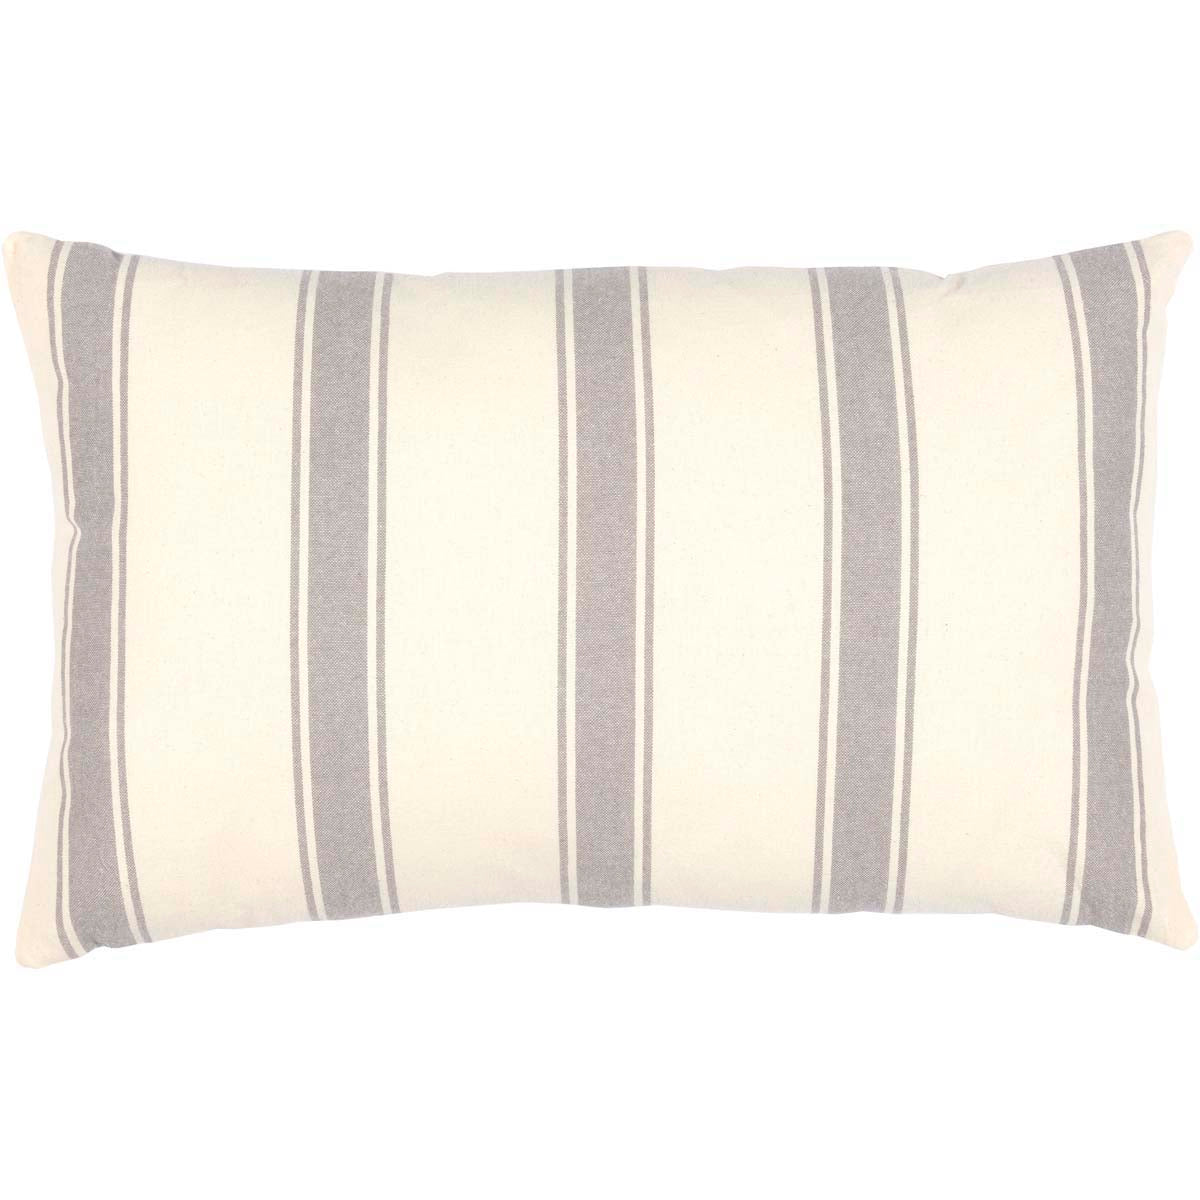 Grace Fabric Pillow 14x22